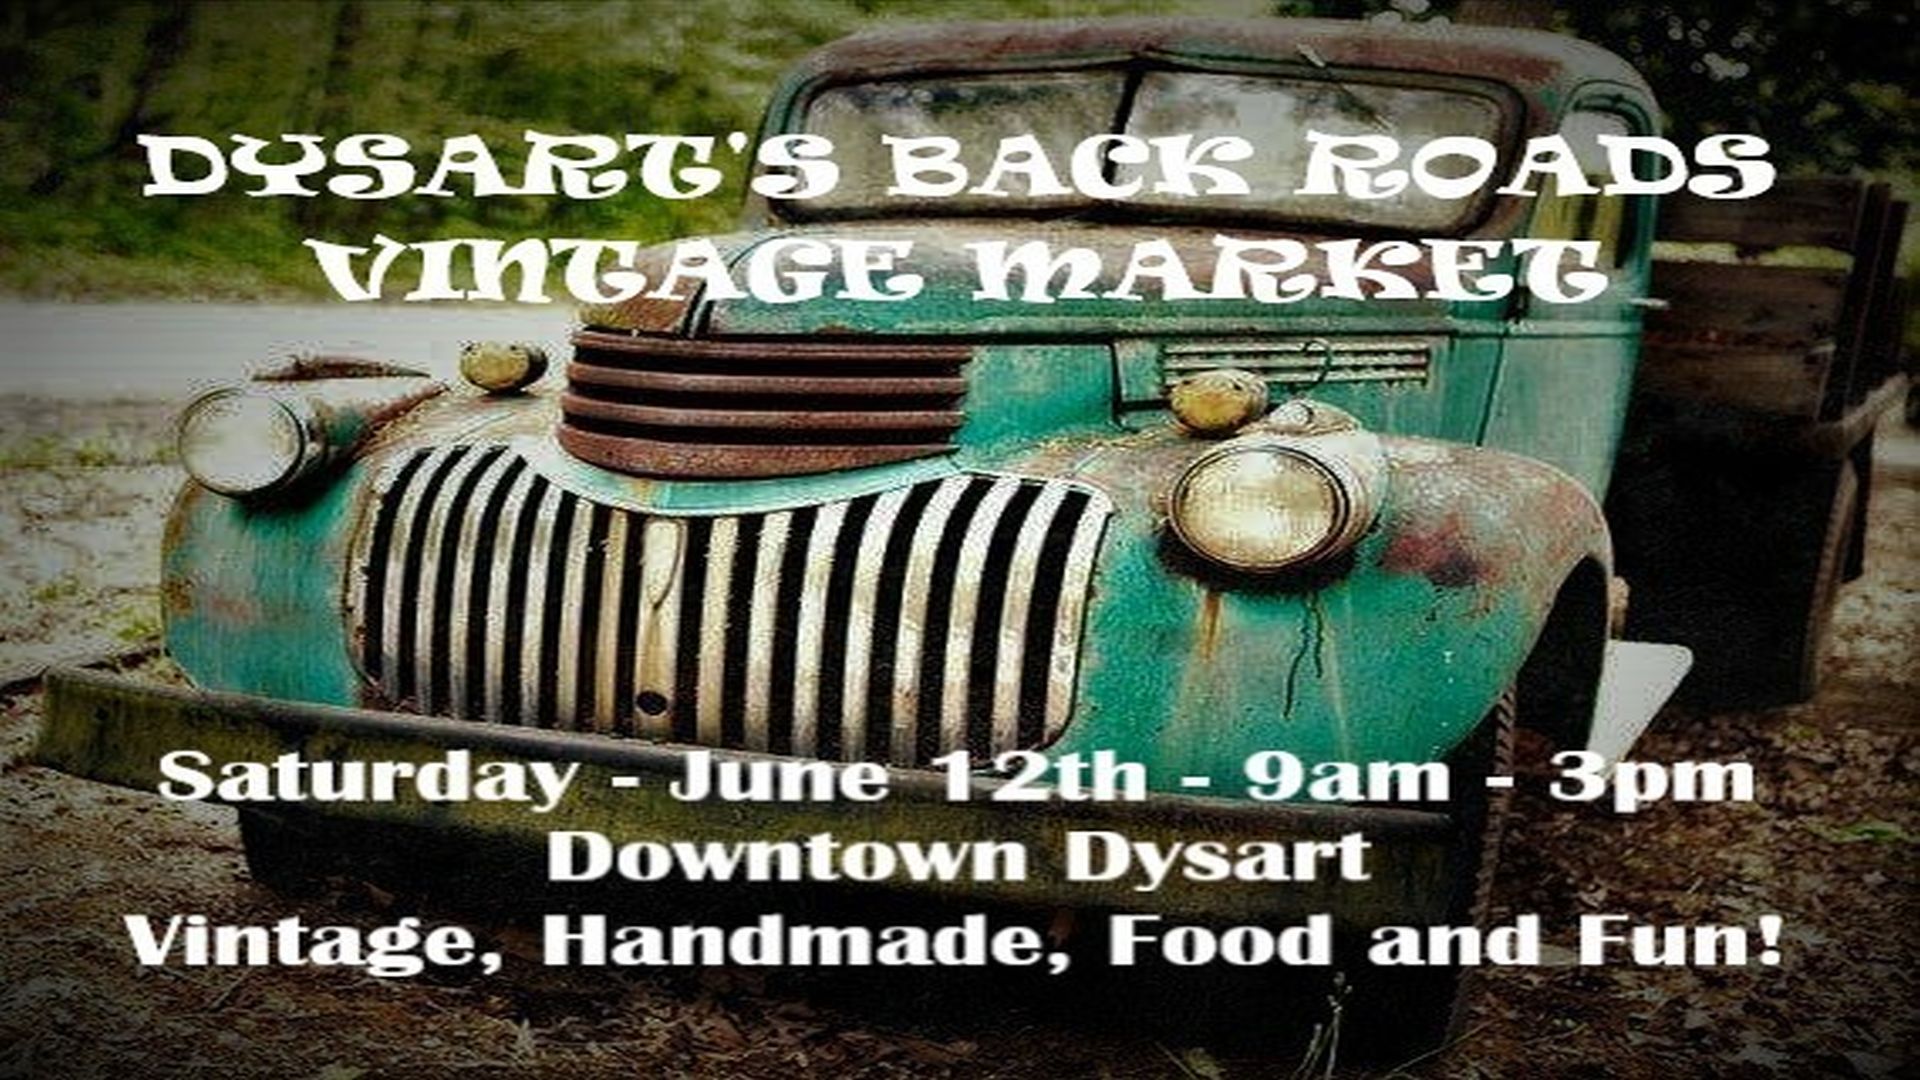 2021 Back Roads Vintage Market - Dysart, Dysart, Iowa, United States